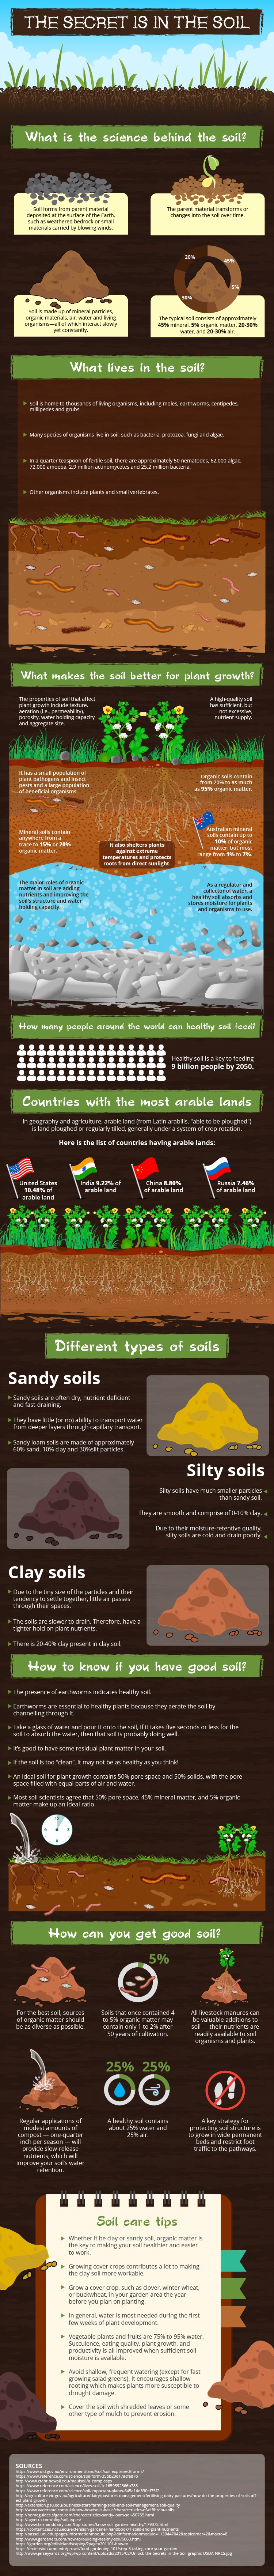 Soil infographic